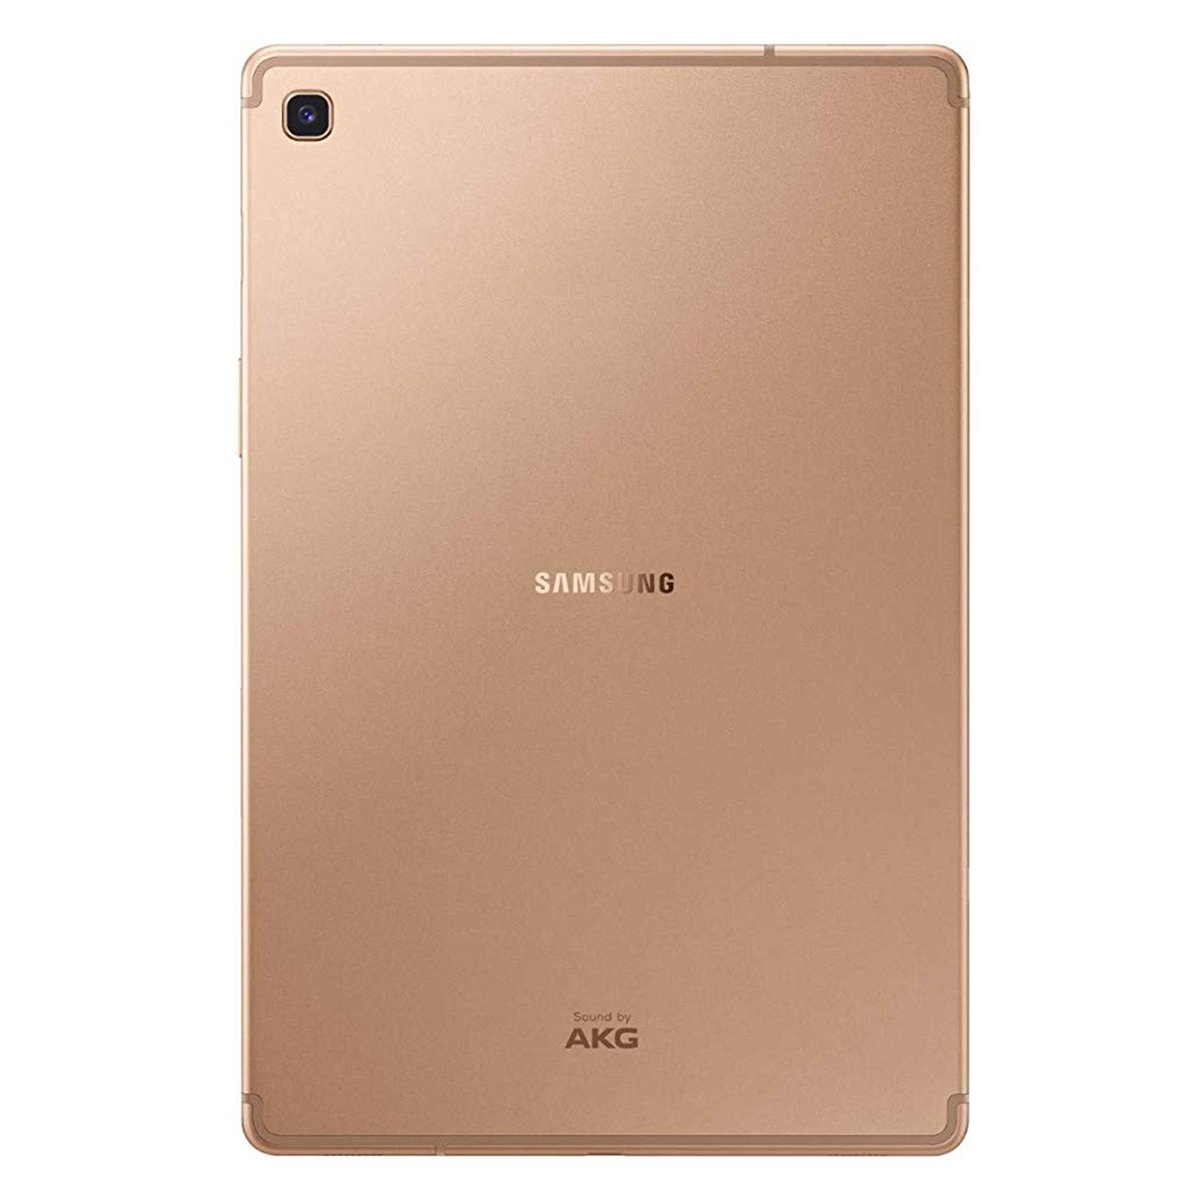 Samsung Galaxy Tab S5e SM-T720 (2019) 10.5" WiFi 64GB Gold